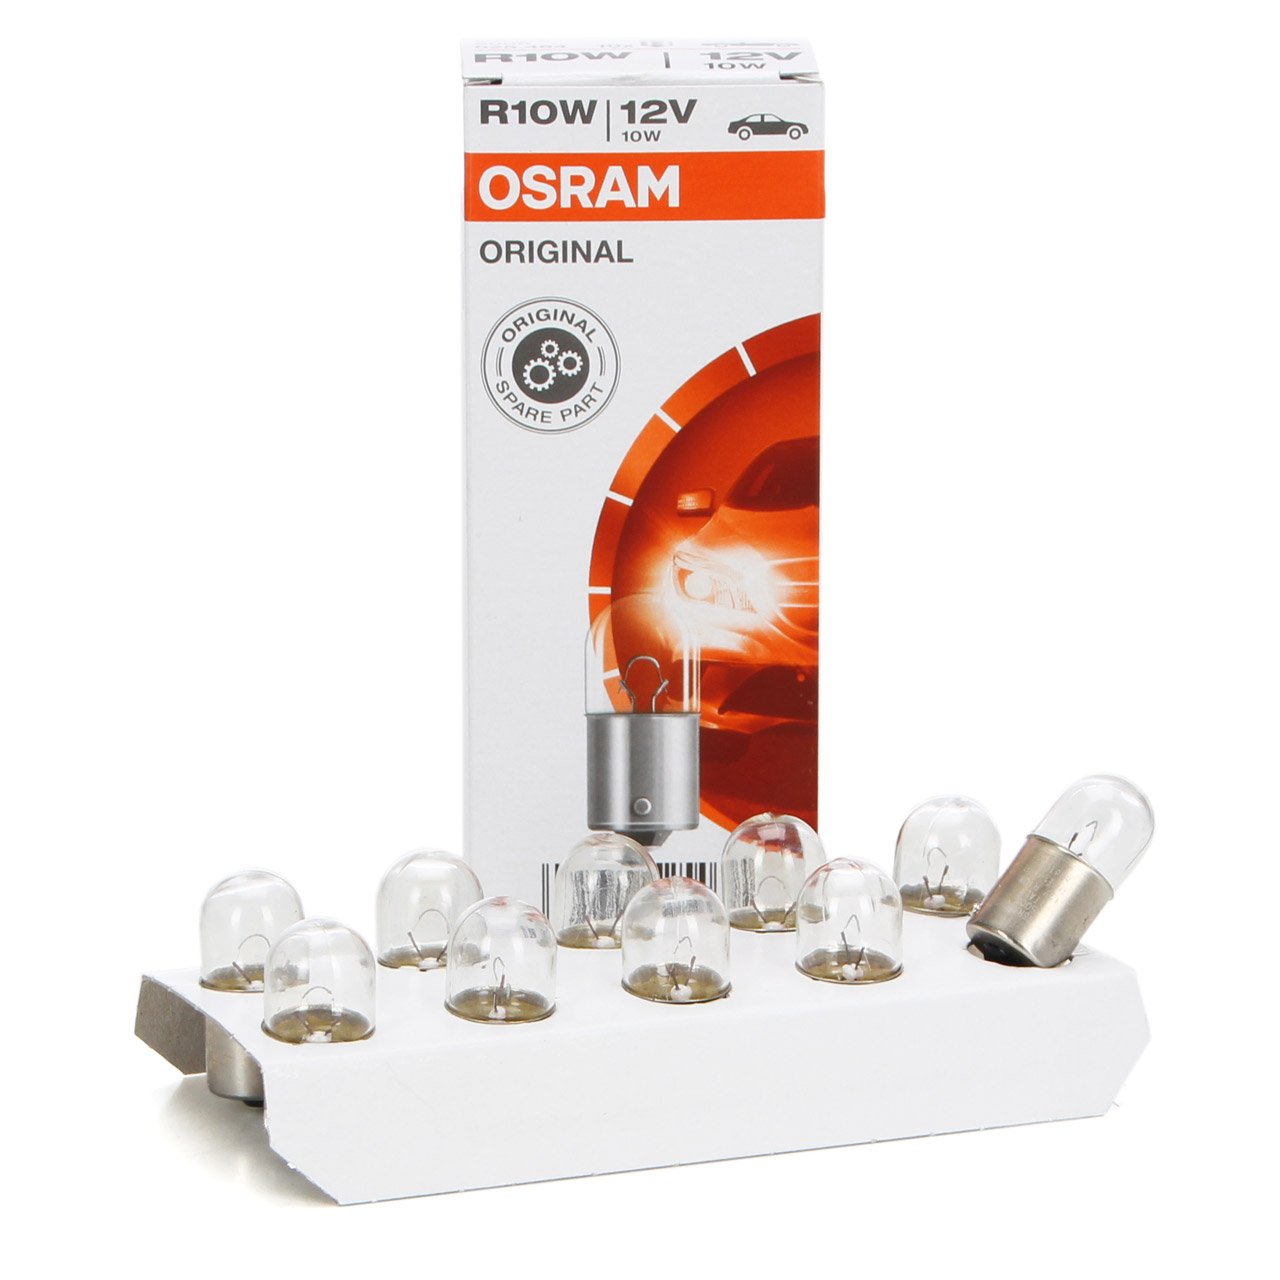 10x OSRAM 5008 Lampe Halogenlampe Glühlampe R10W ORIGINAL-Line 12V 10W BA15s